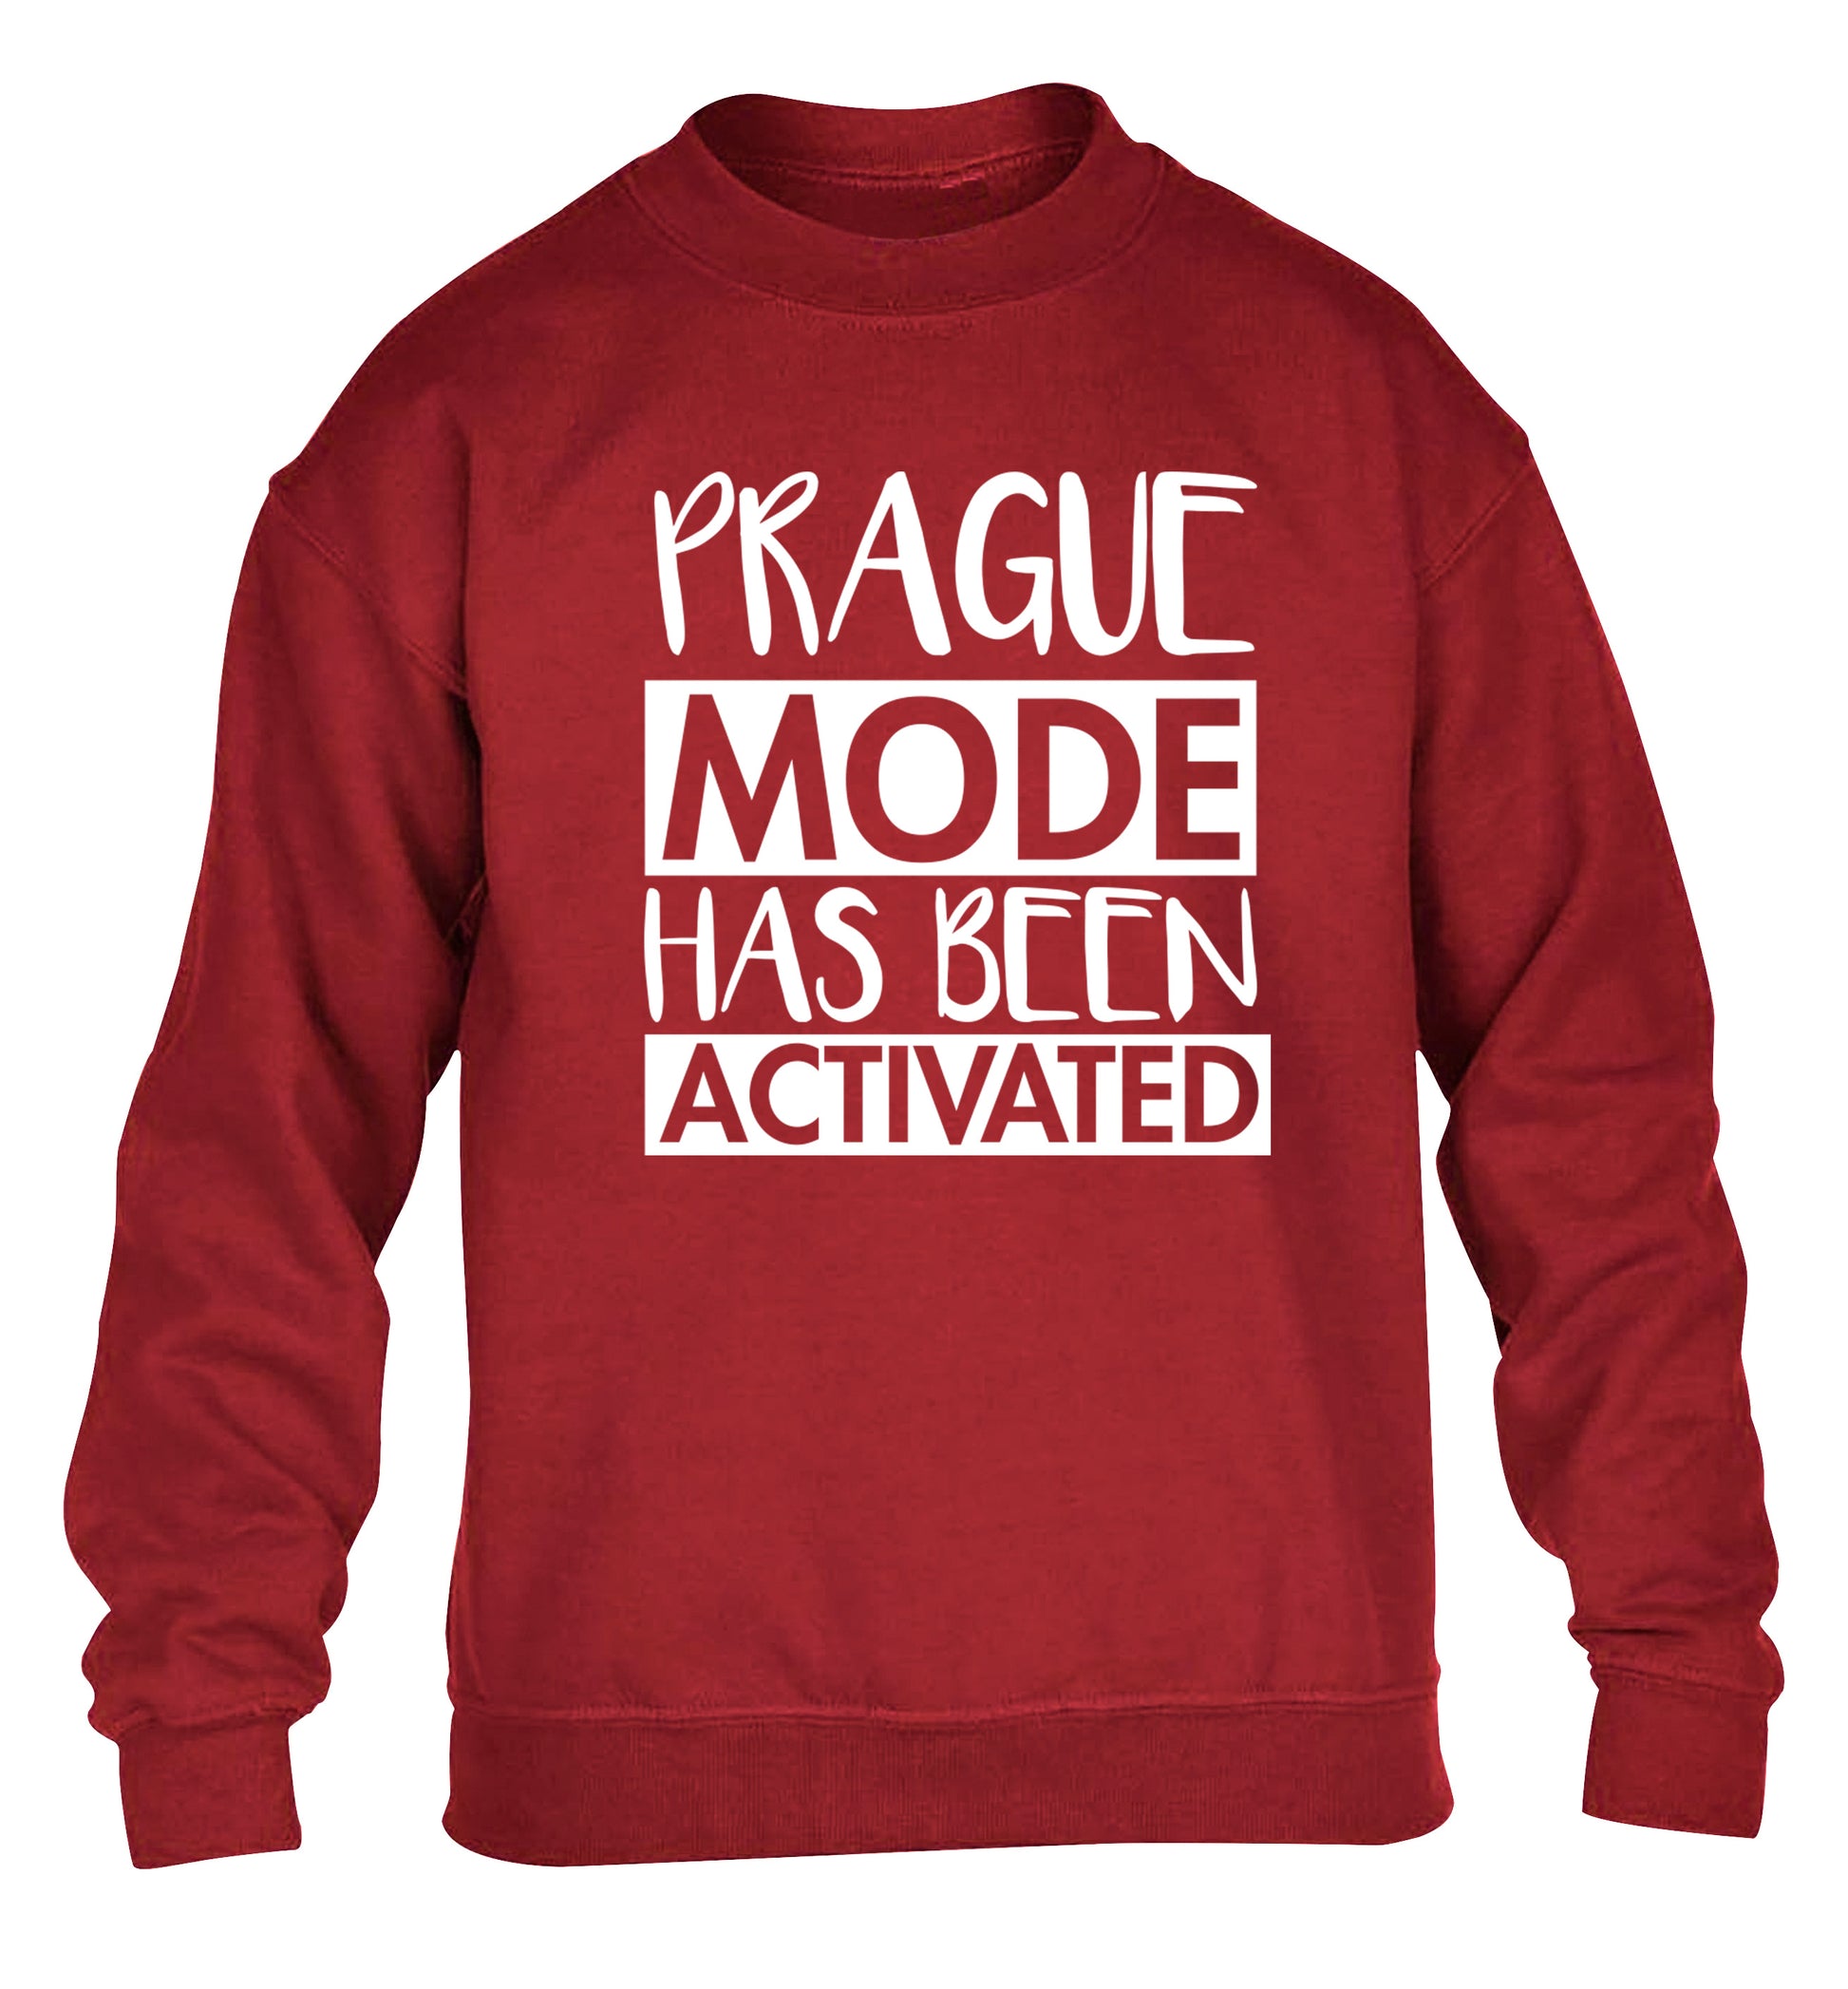 Prague mode has been activated children's grey sweater 12-13 Years